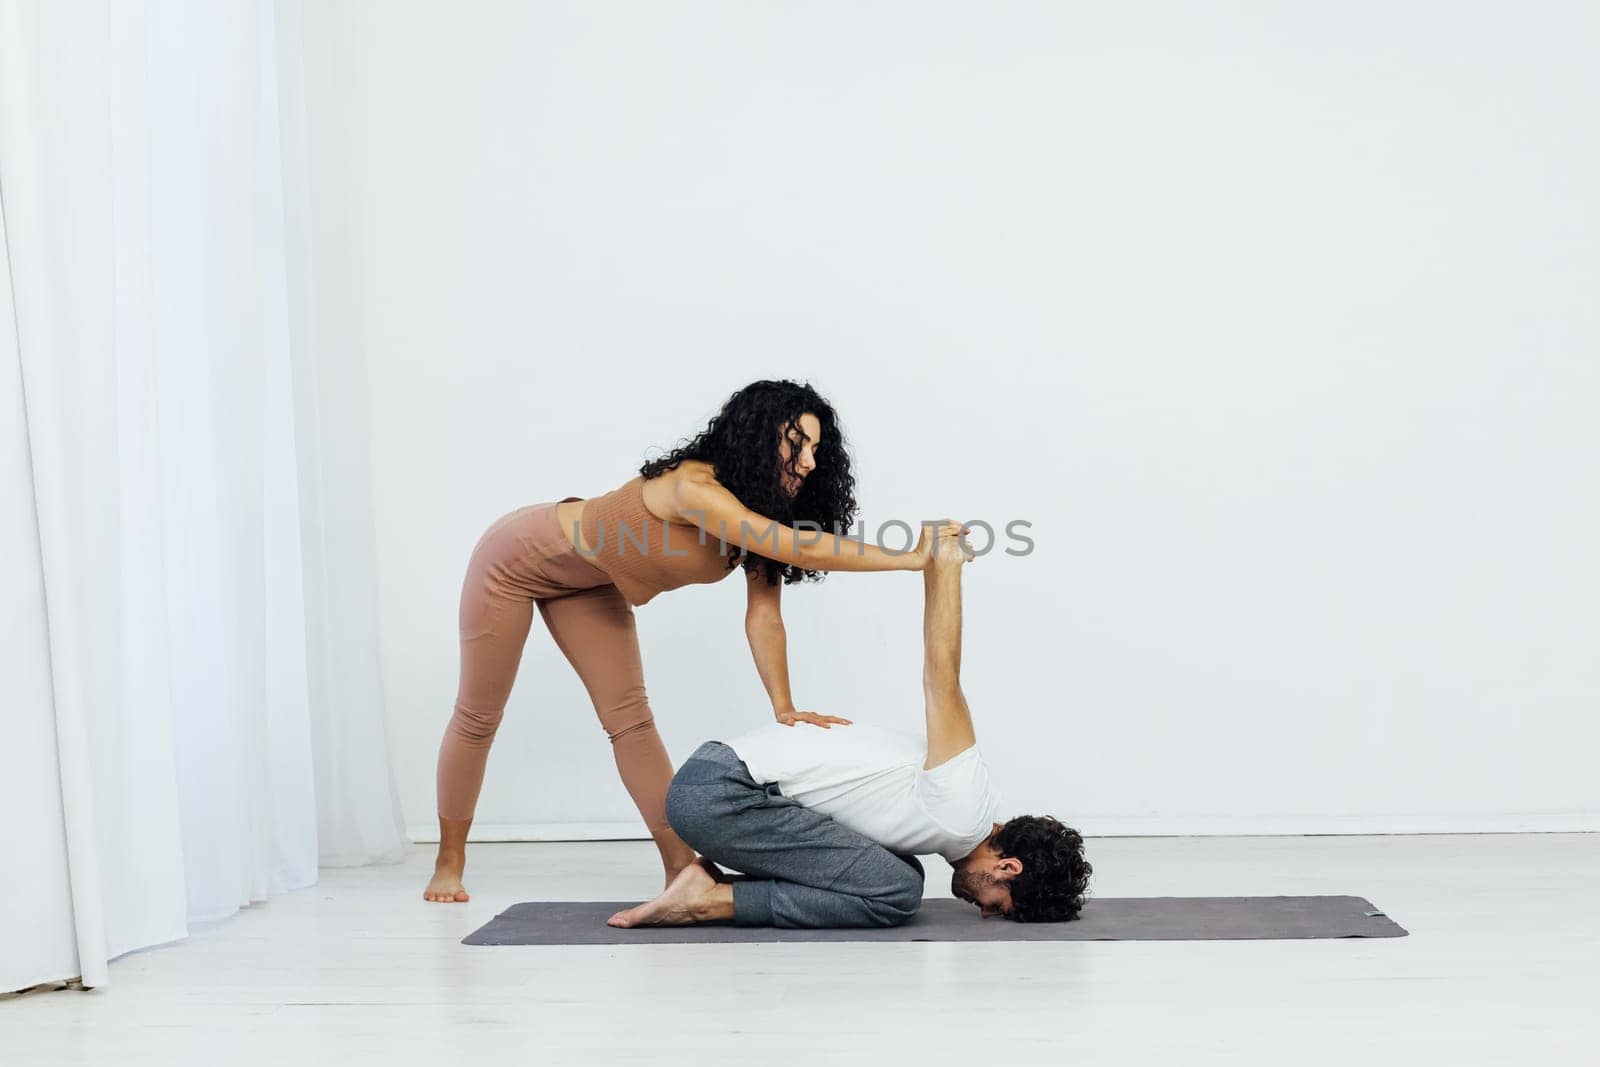 Man and woman doing yoga exercises meditation asana lotus pose by Simakov